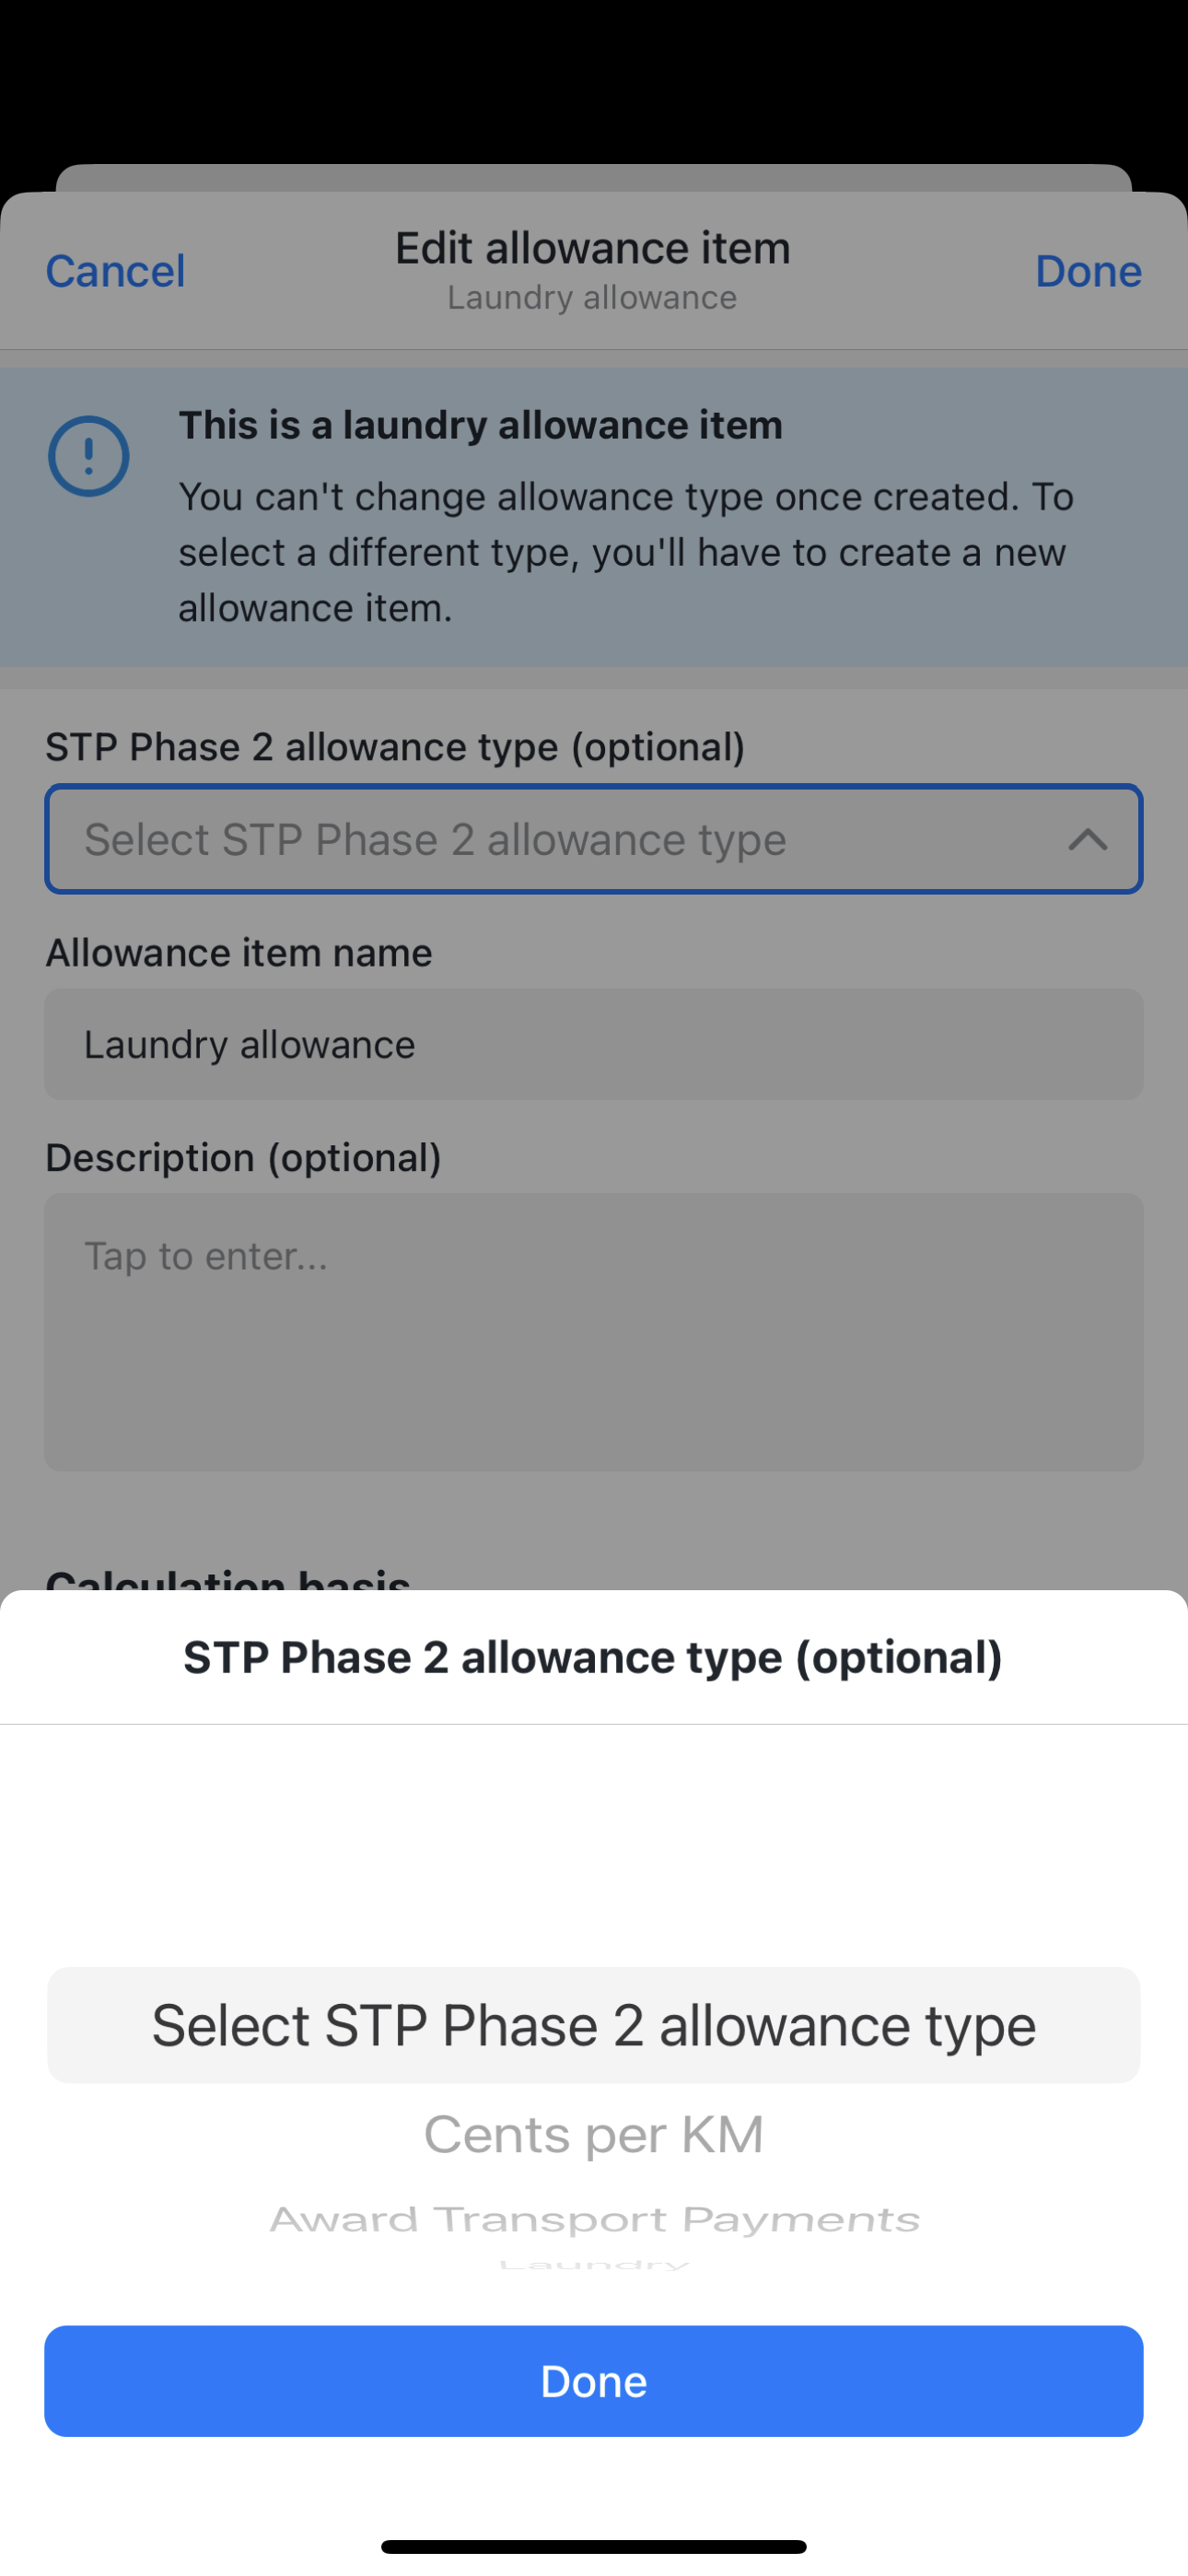 STP Phase 2 allowance type (optional)